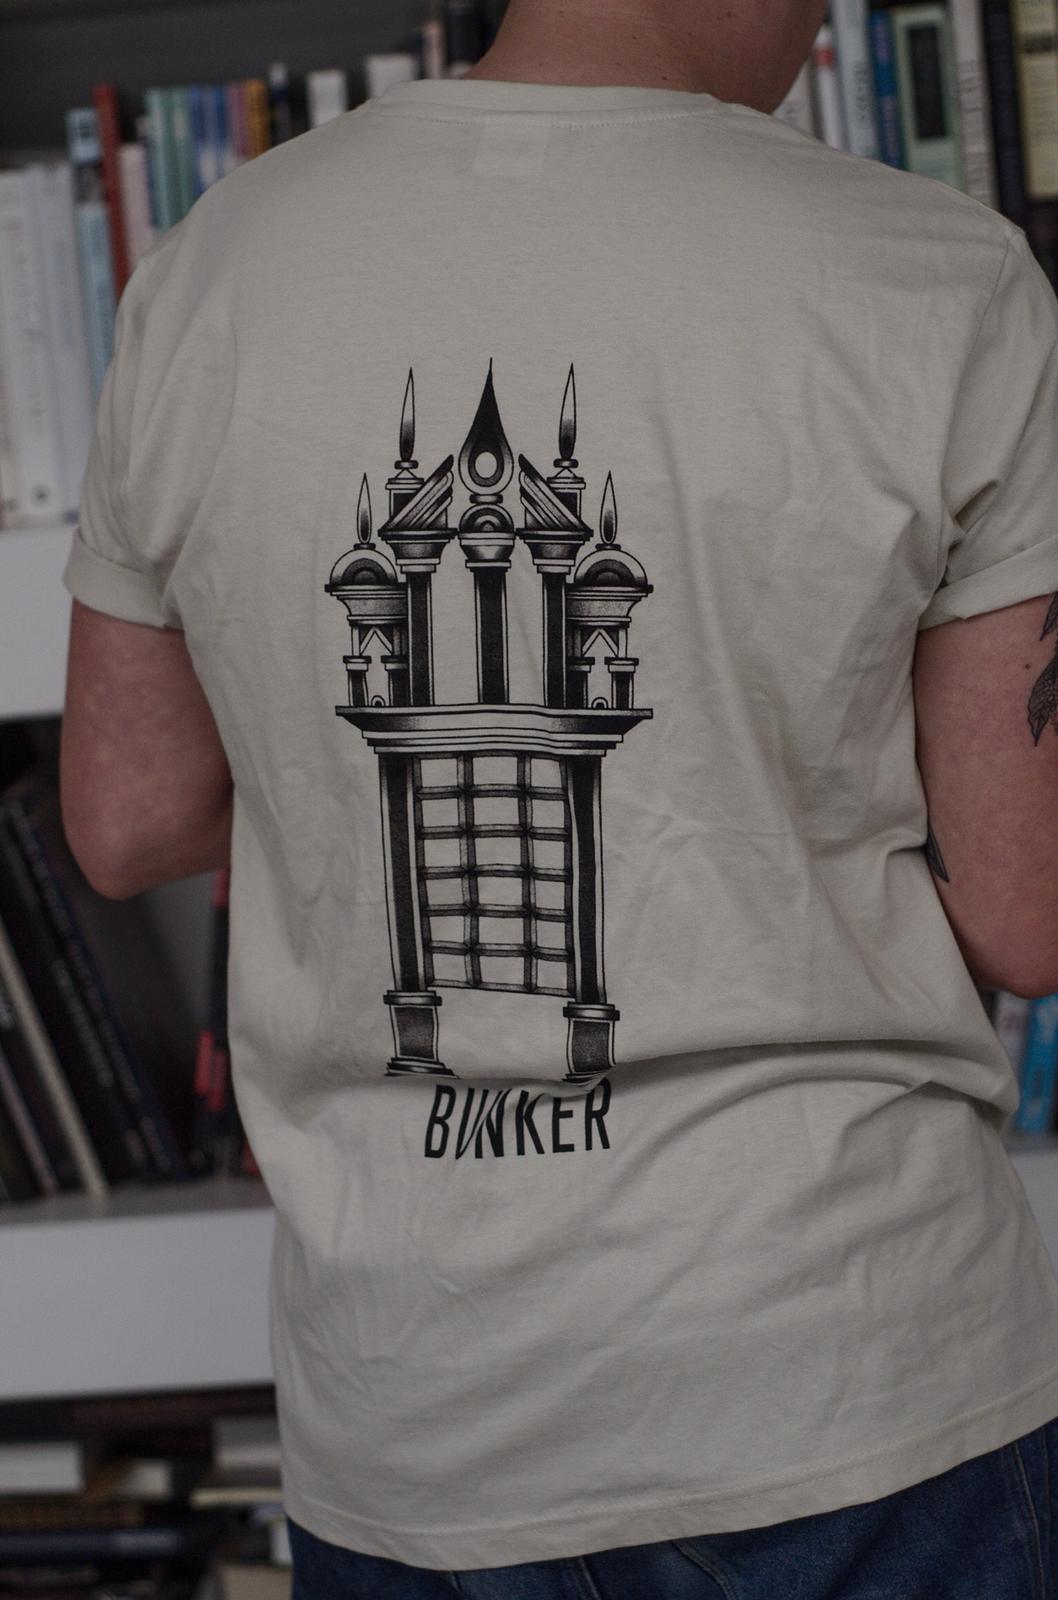 Bunker t-shirt 2019 - Jan